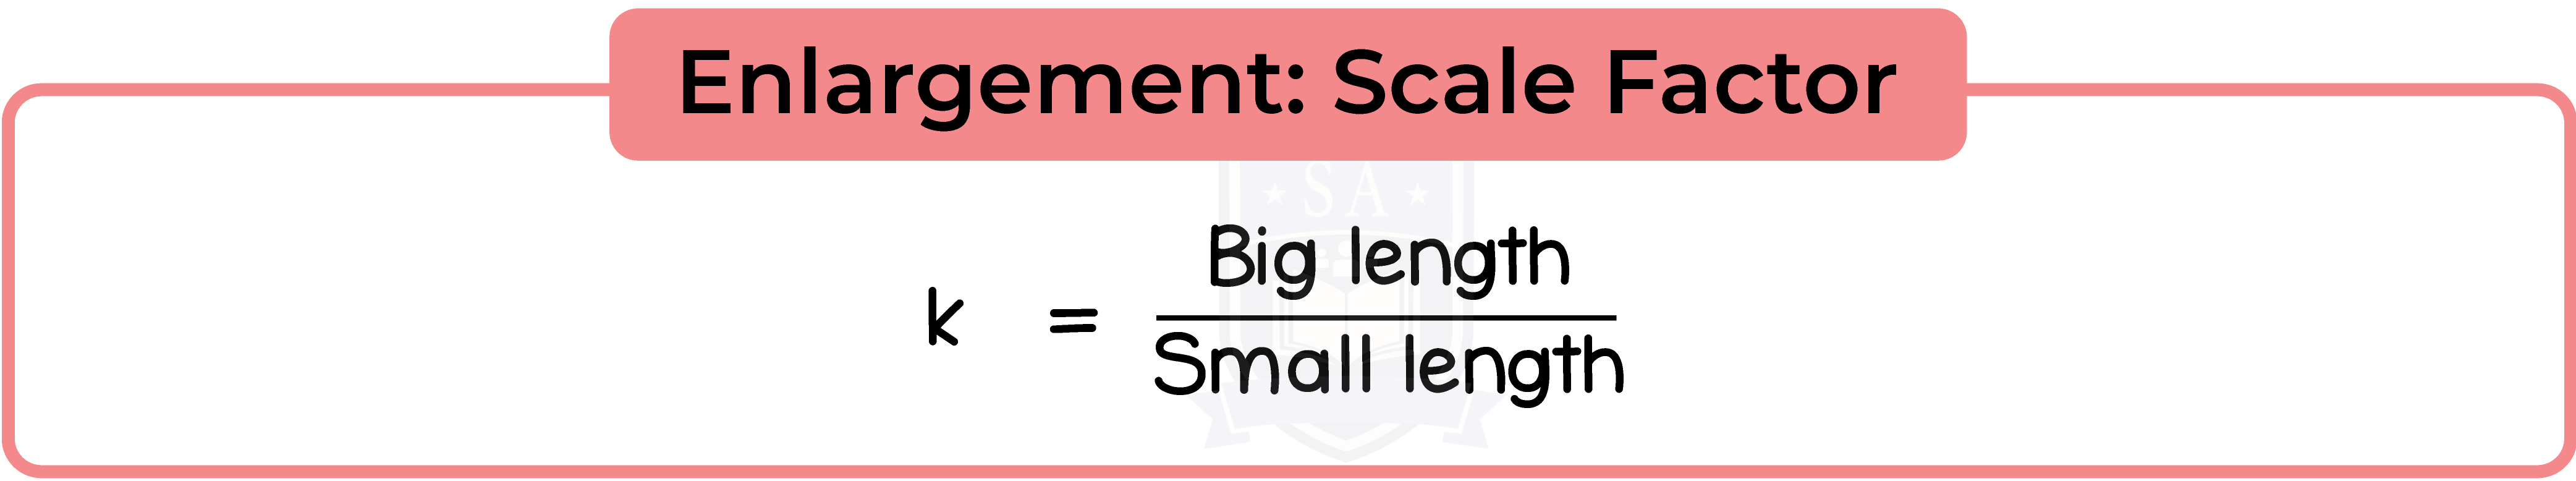 edexcel_igcse_mathematics a_topic 37_transformation geometry_010_Enlargement: Scale Factor